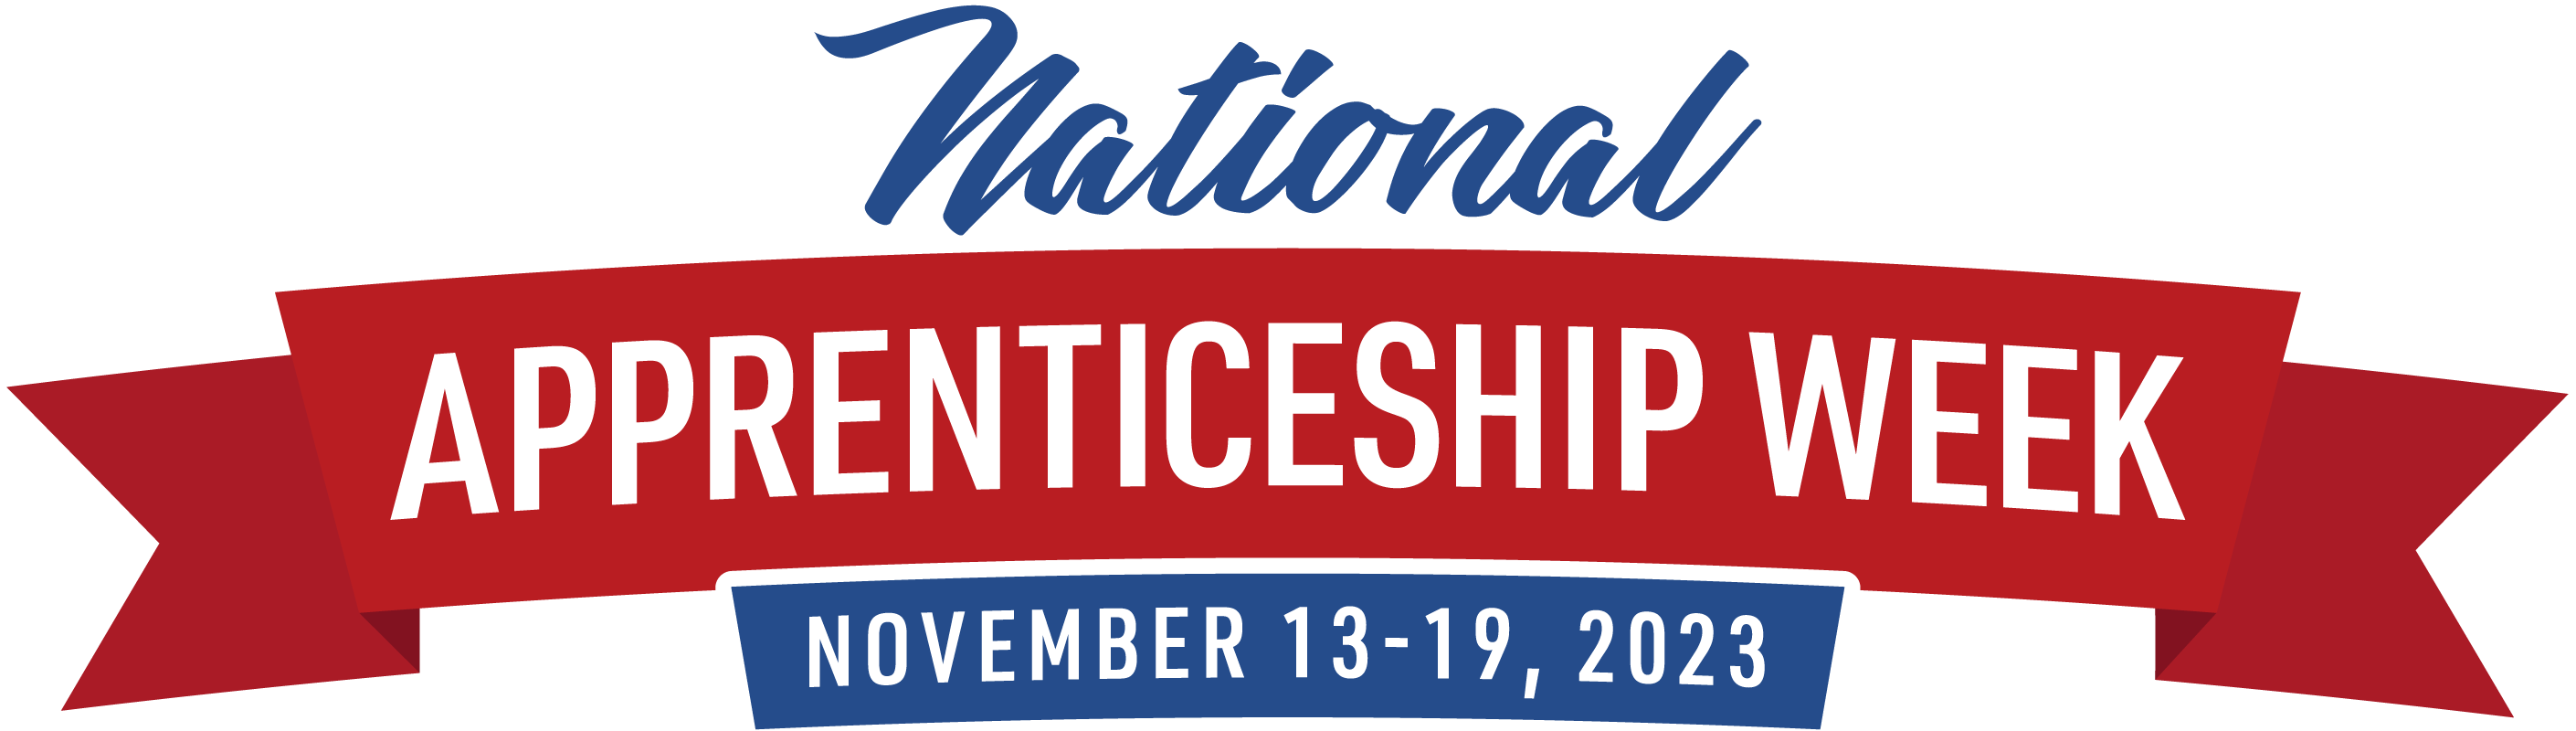 National Apprenticeship Week | Apprenticeship.gov